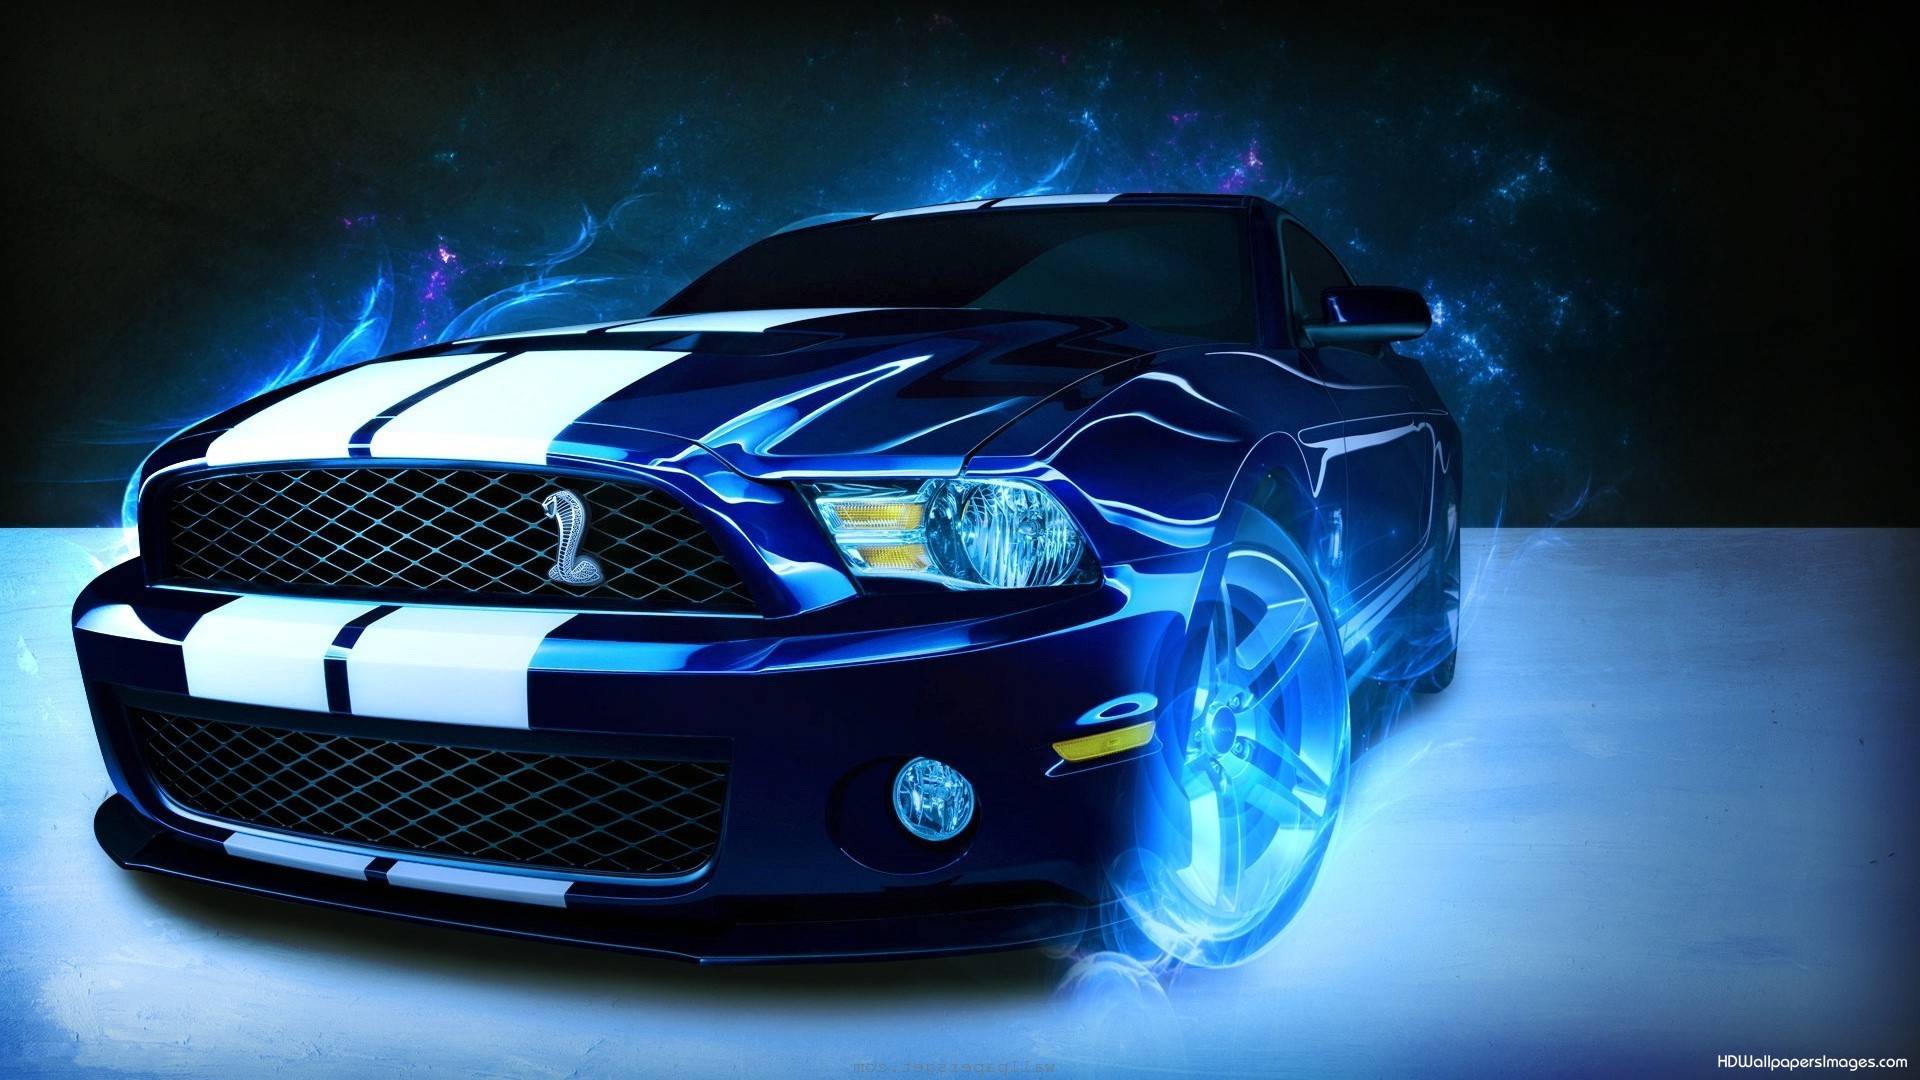 Ford Mustang Gt Wallpaper Best Desktopbest